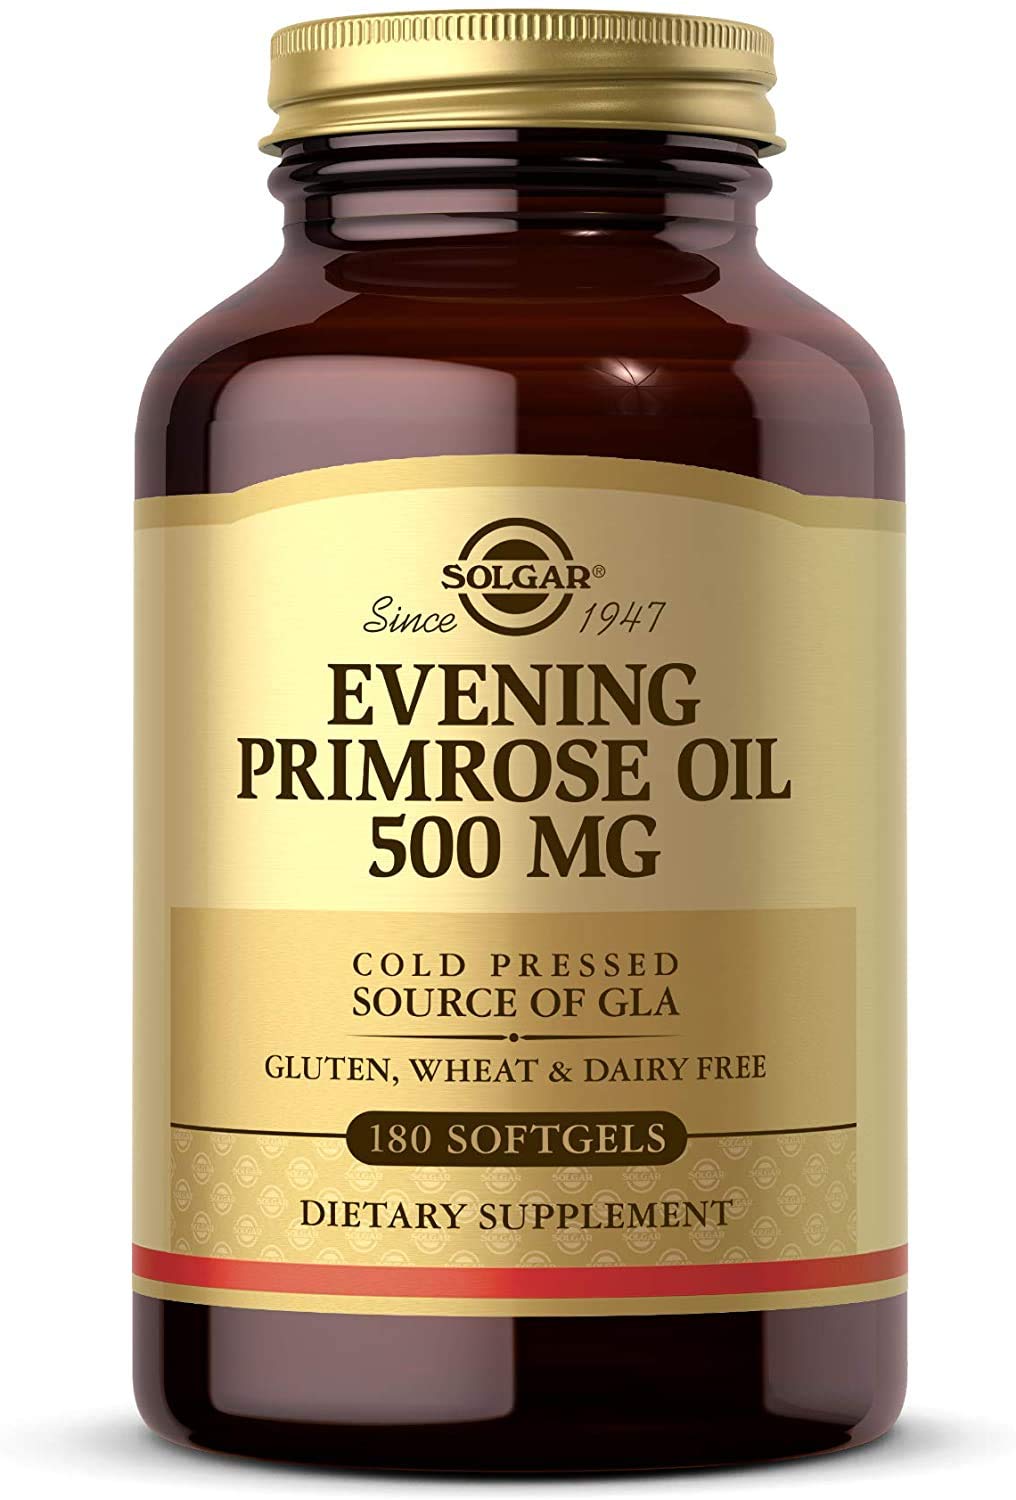 Solgar Evening Primrose Oil Supplement, 500 Mg